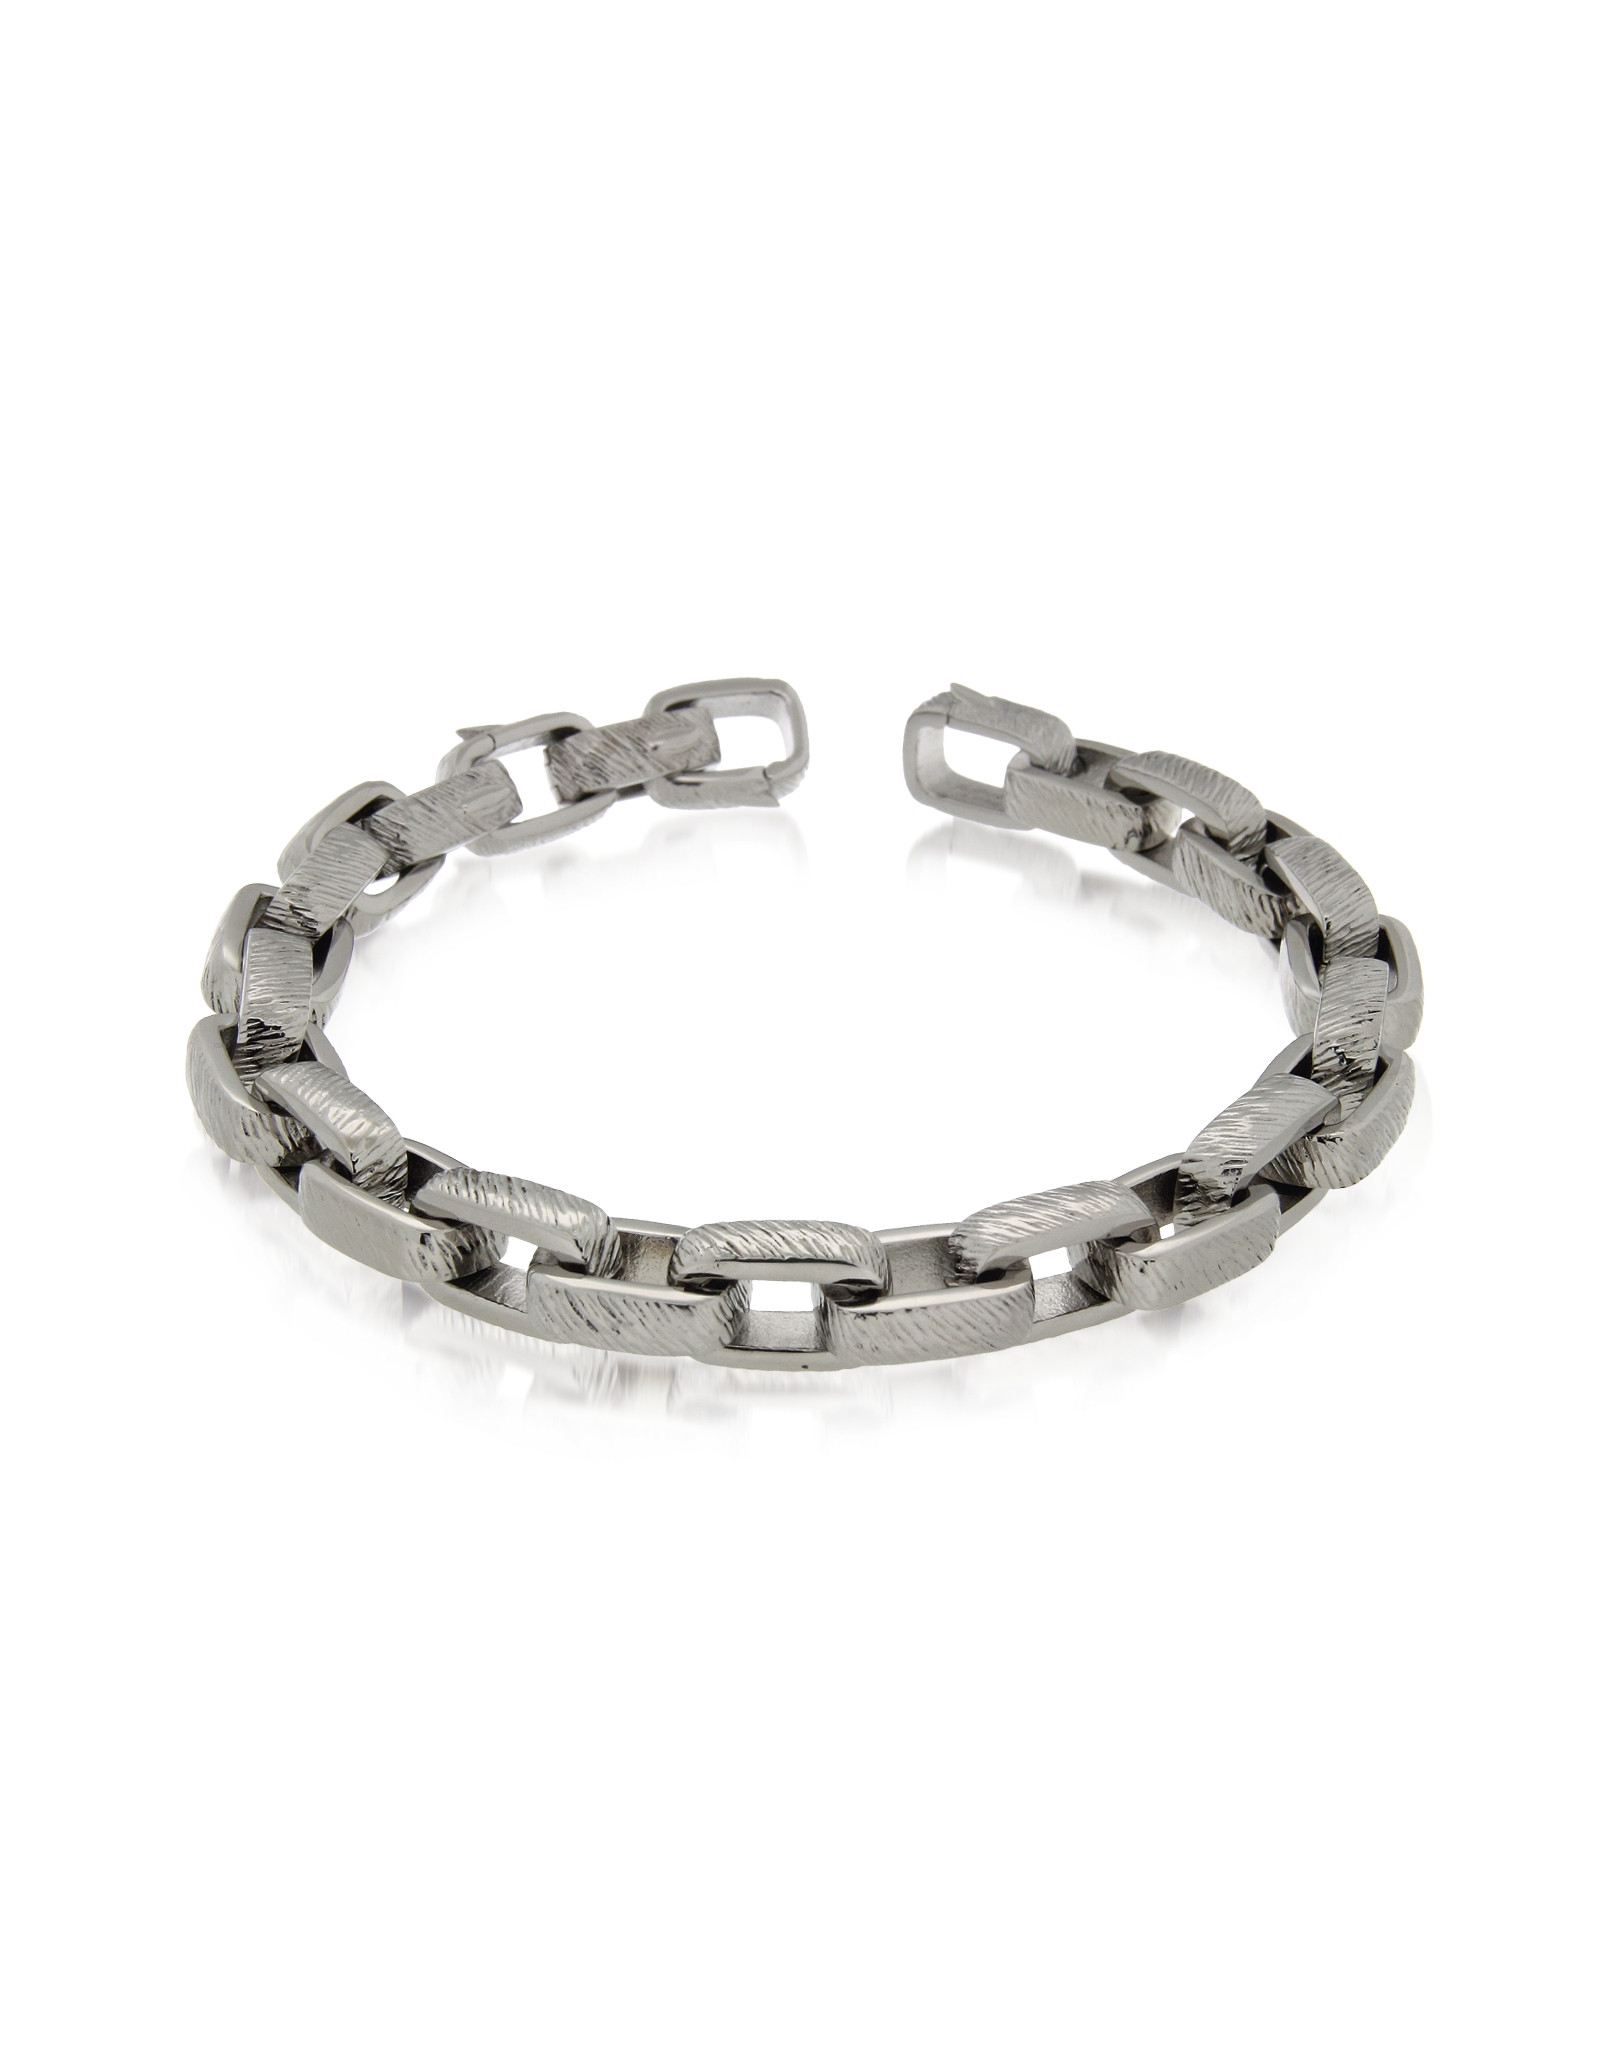 Lyst - Zoppini Zo-chain Stainless Steel Link Bracelet in Metallic for Men